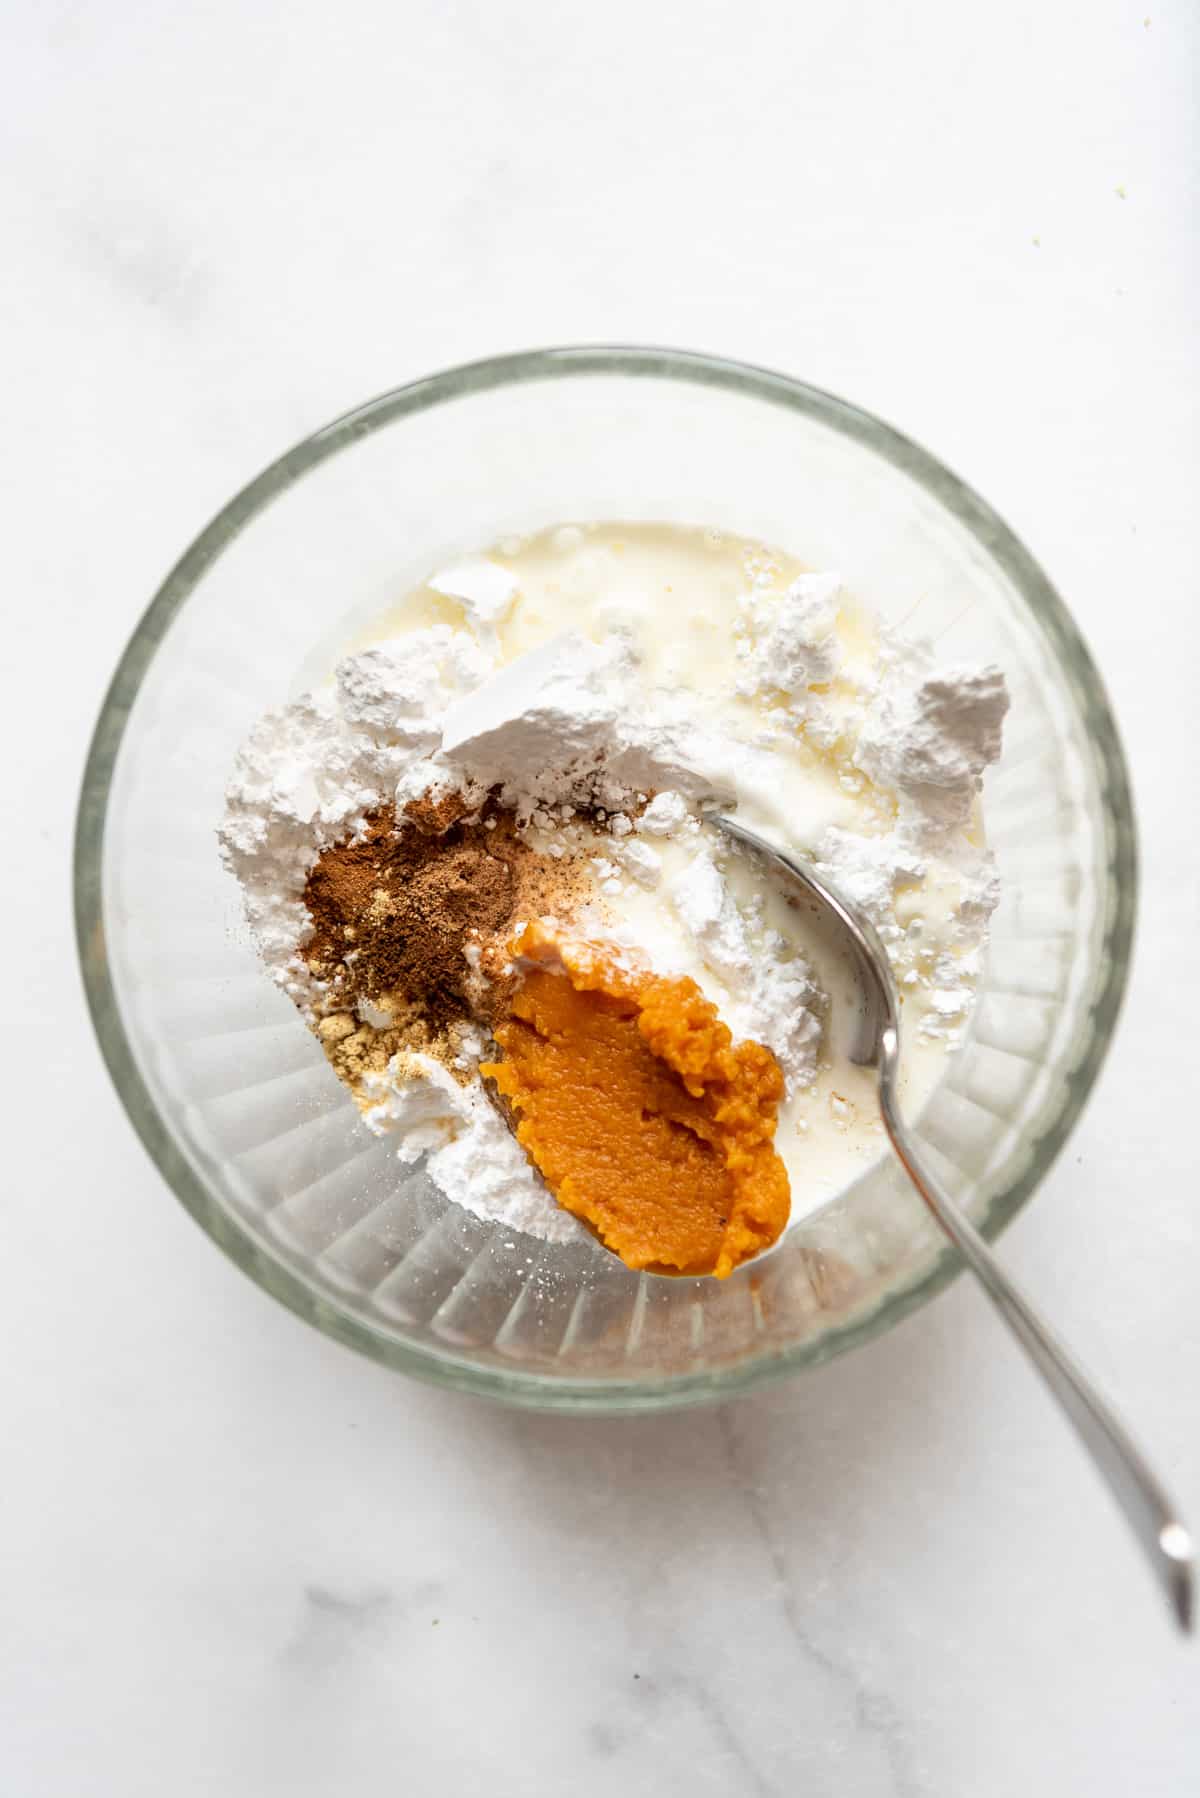 Pumpkin, powdered sugar, cinnamon, and heavy cream in a bowl with a spoon.